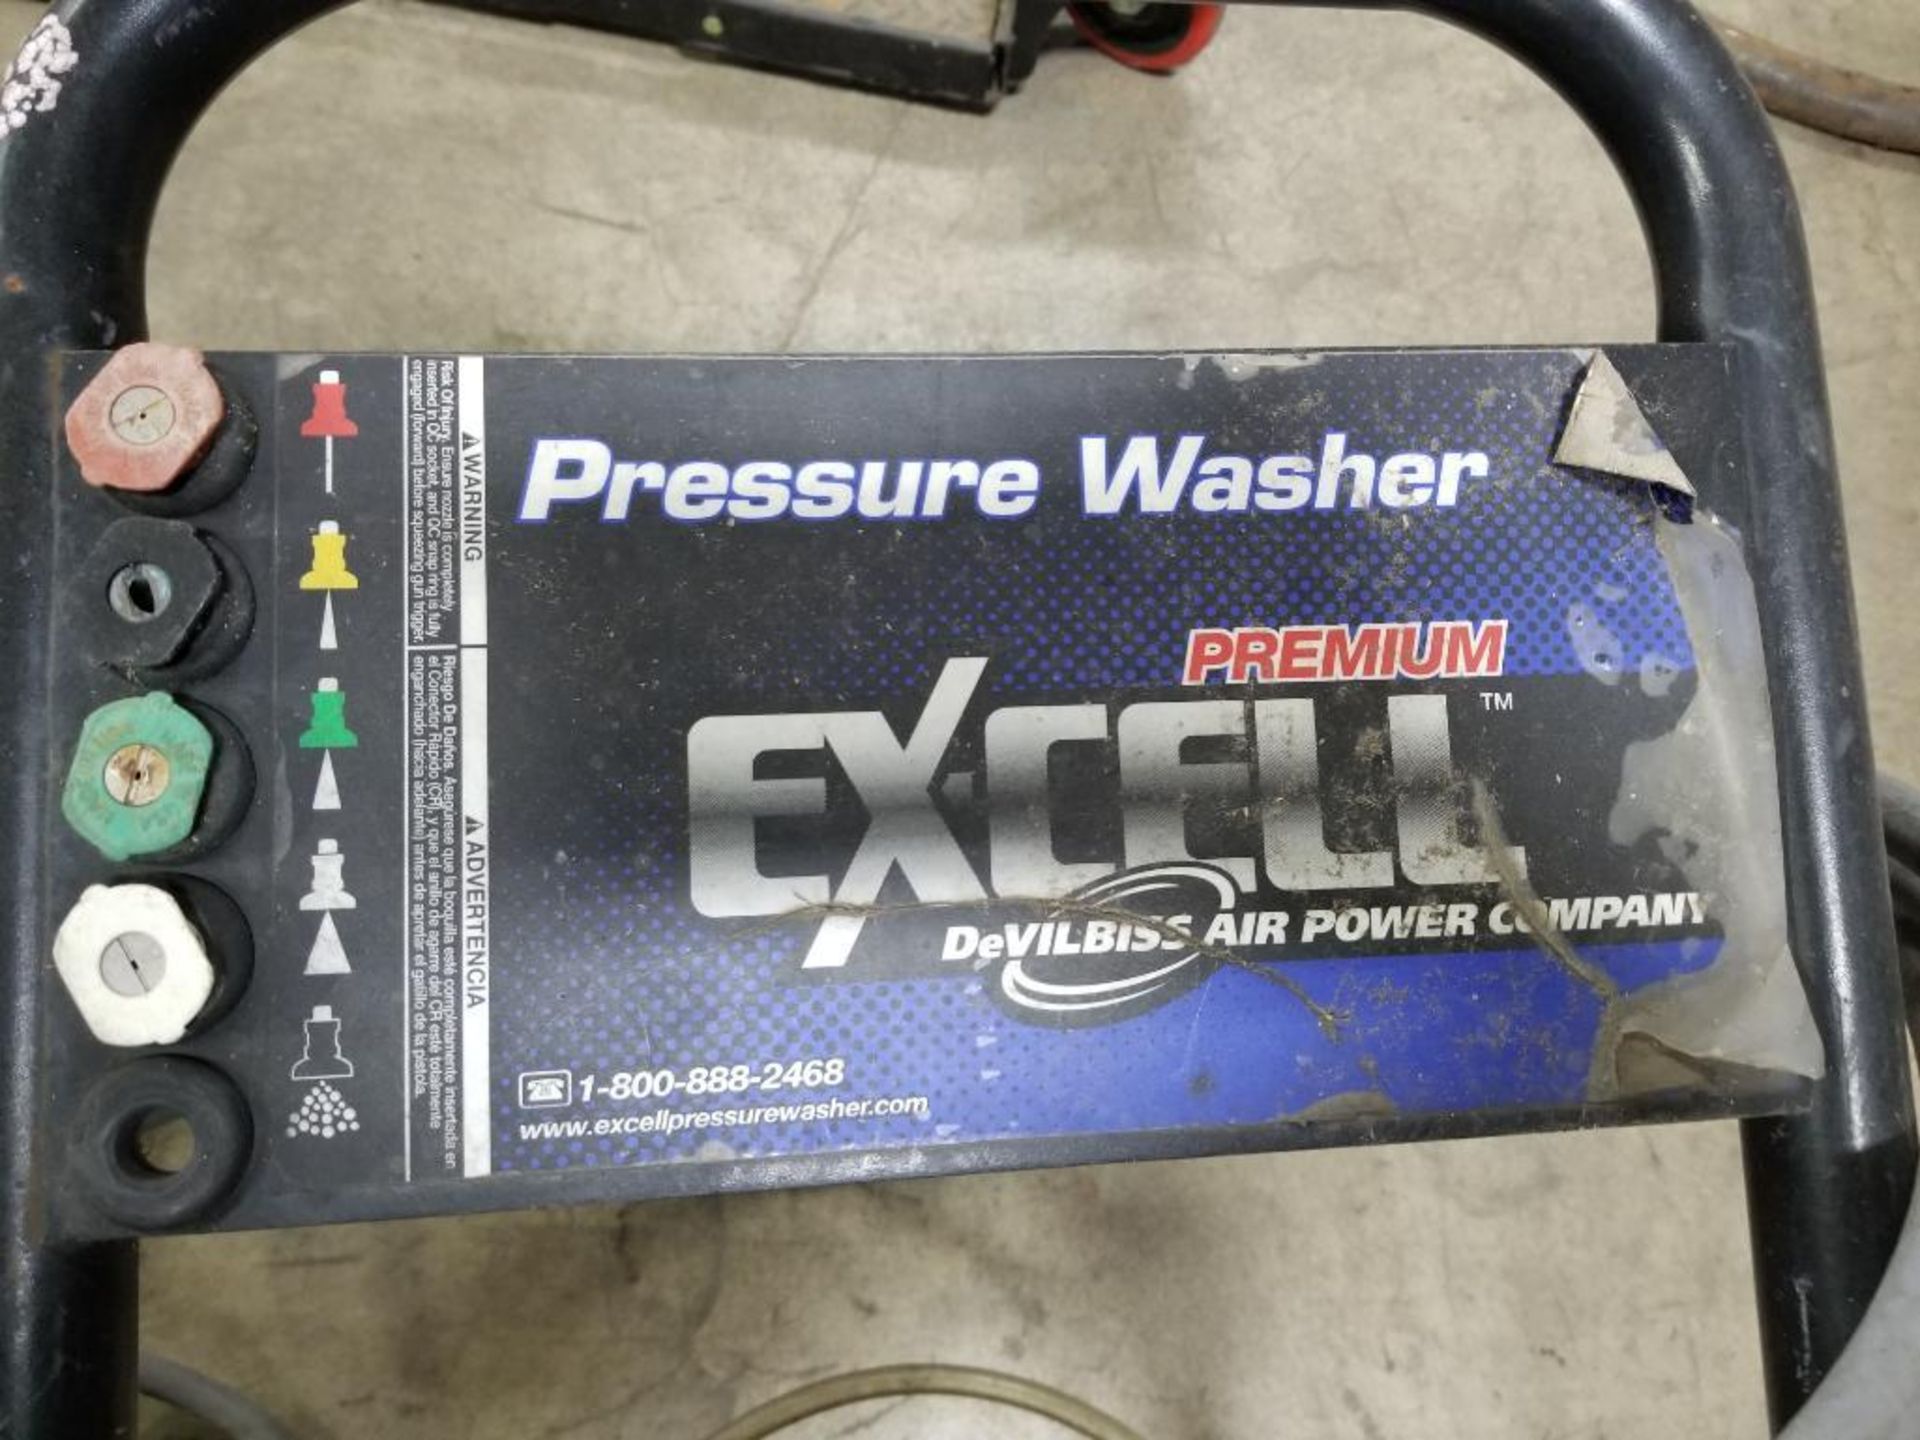 Devilbiss Premium Ex-Cell pressure washer. Honda XR2500 motor. - Image 3 of 5